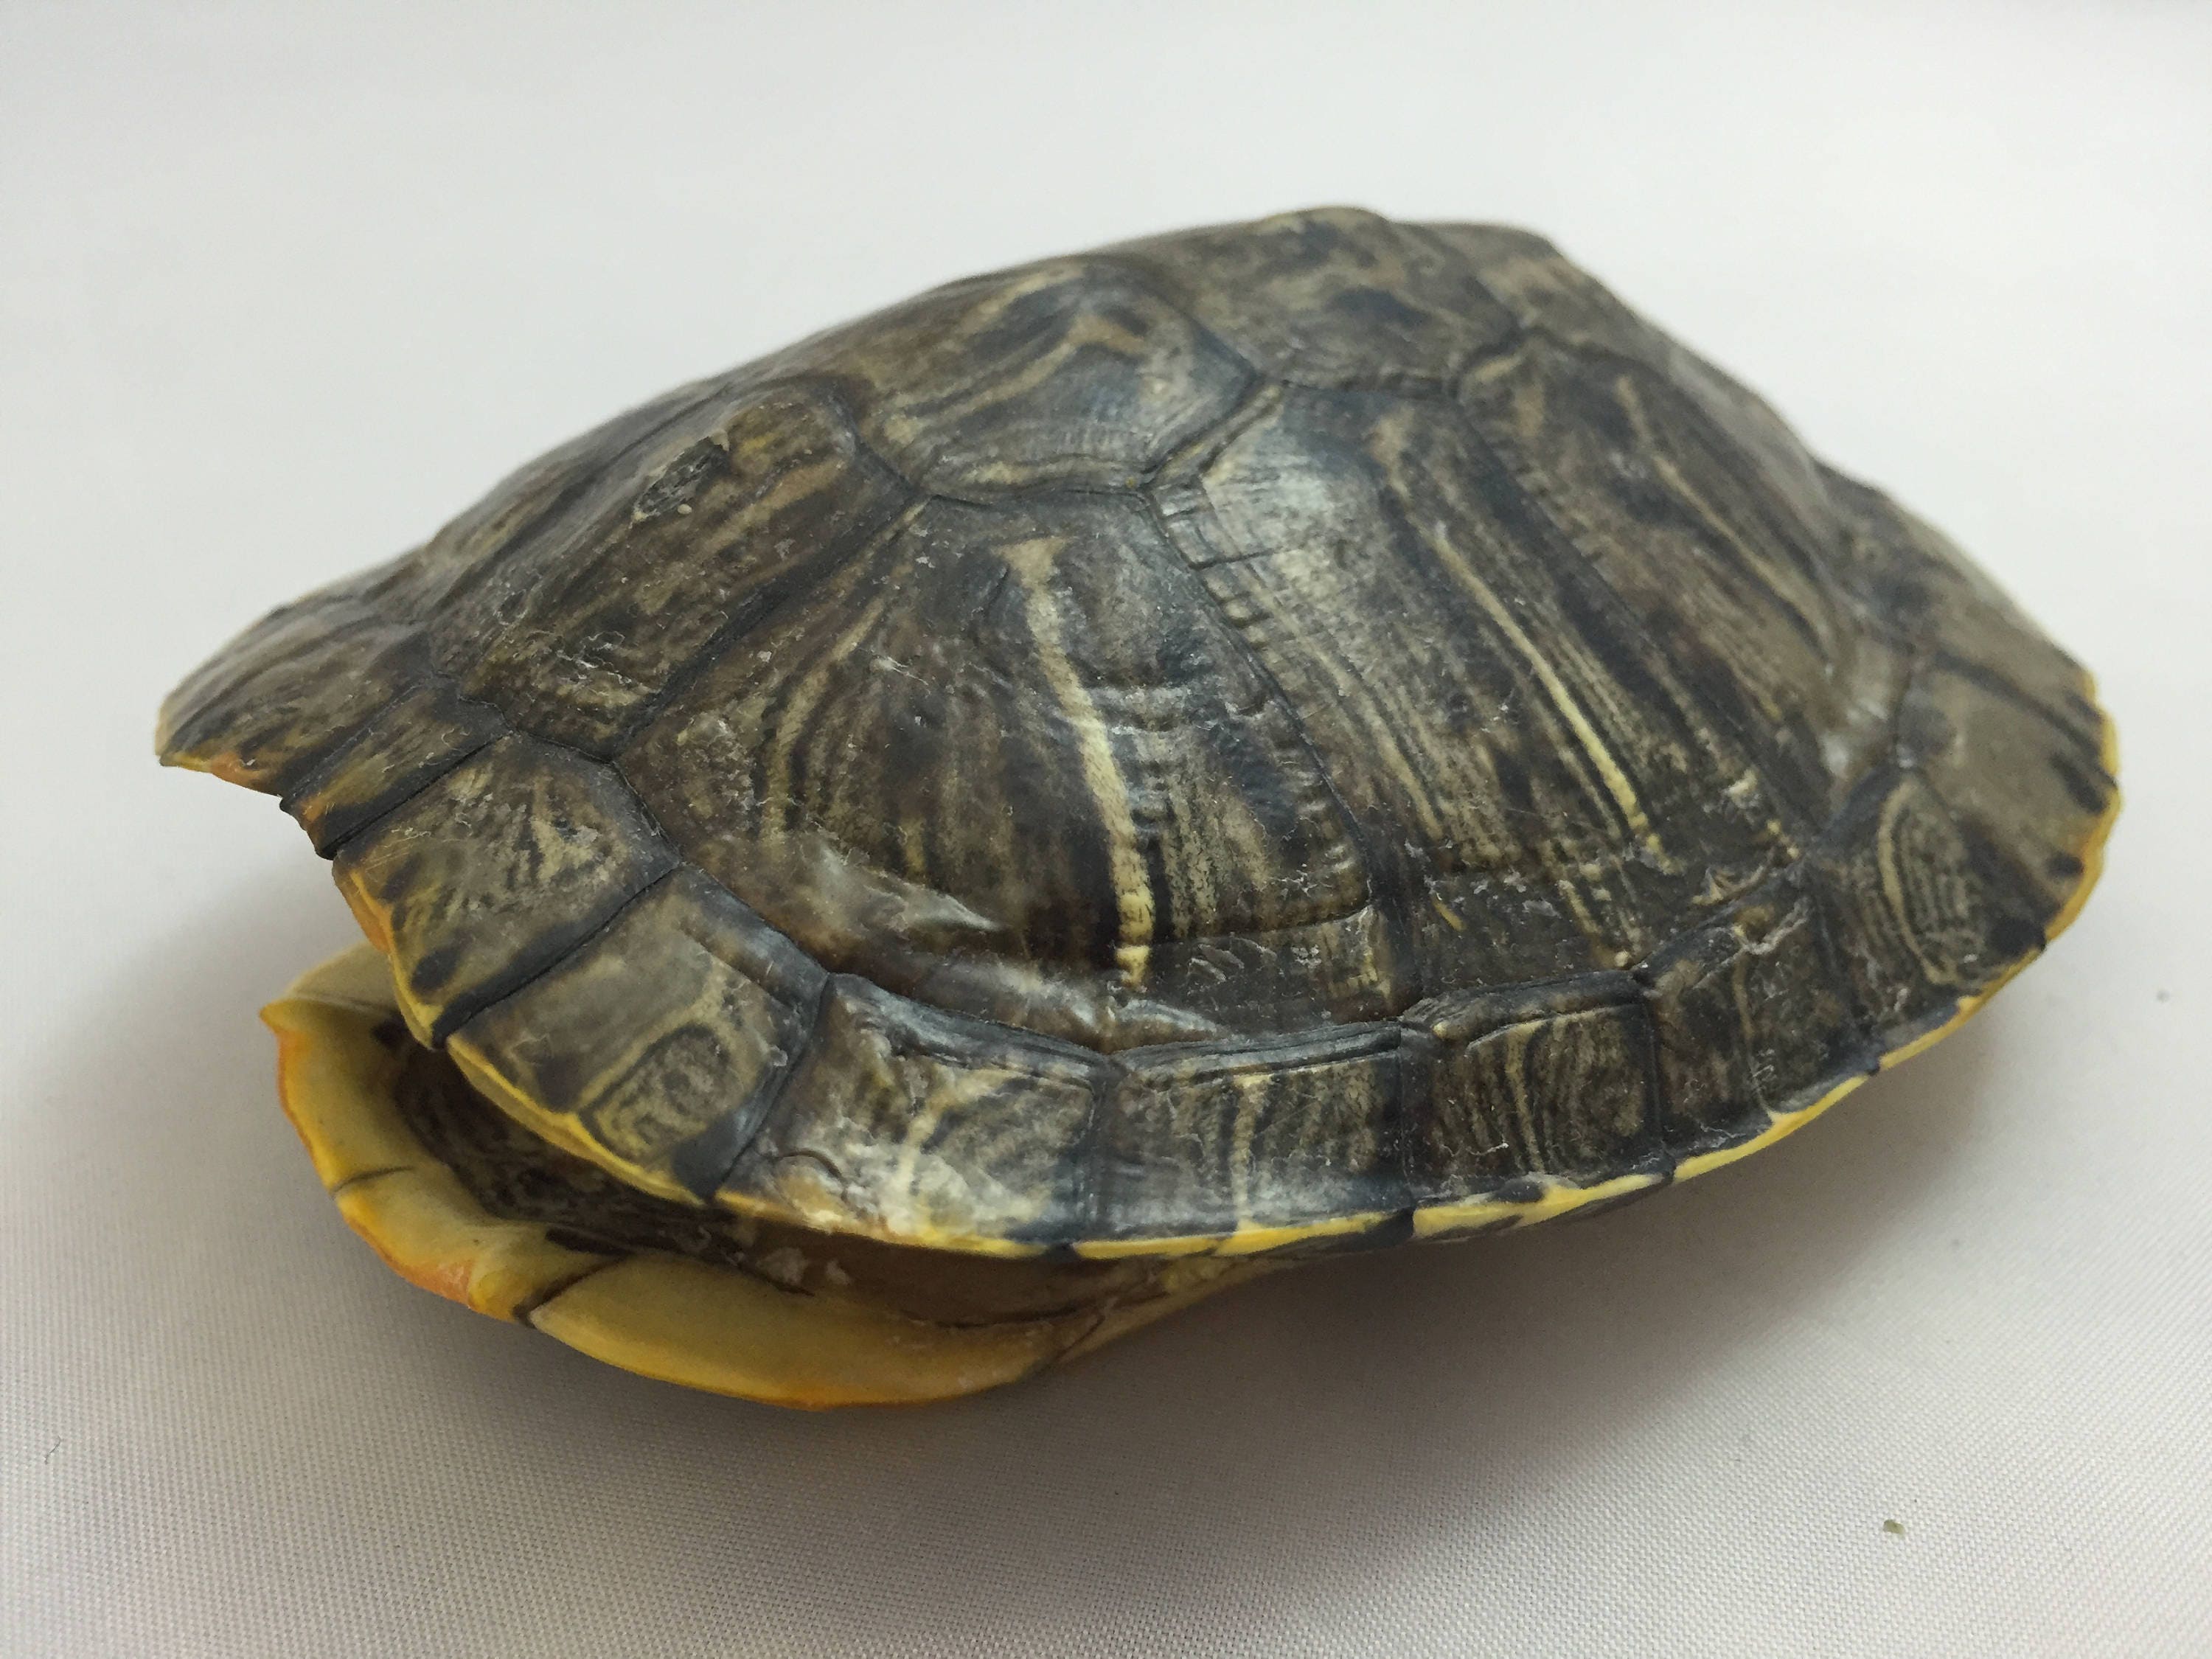 Turtle shell. Tortoise Shell. Tortoise Shell mollusk. Максфрант Turtle-Shell.